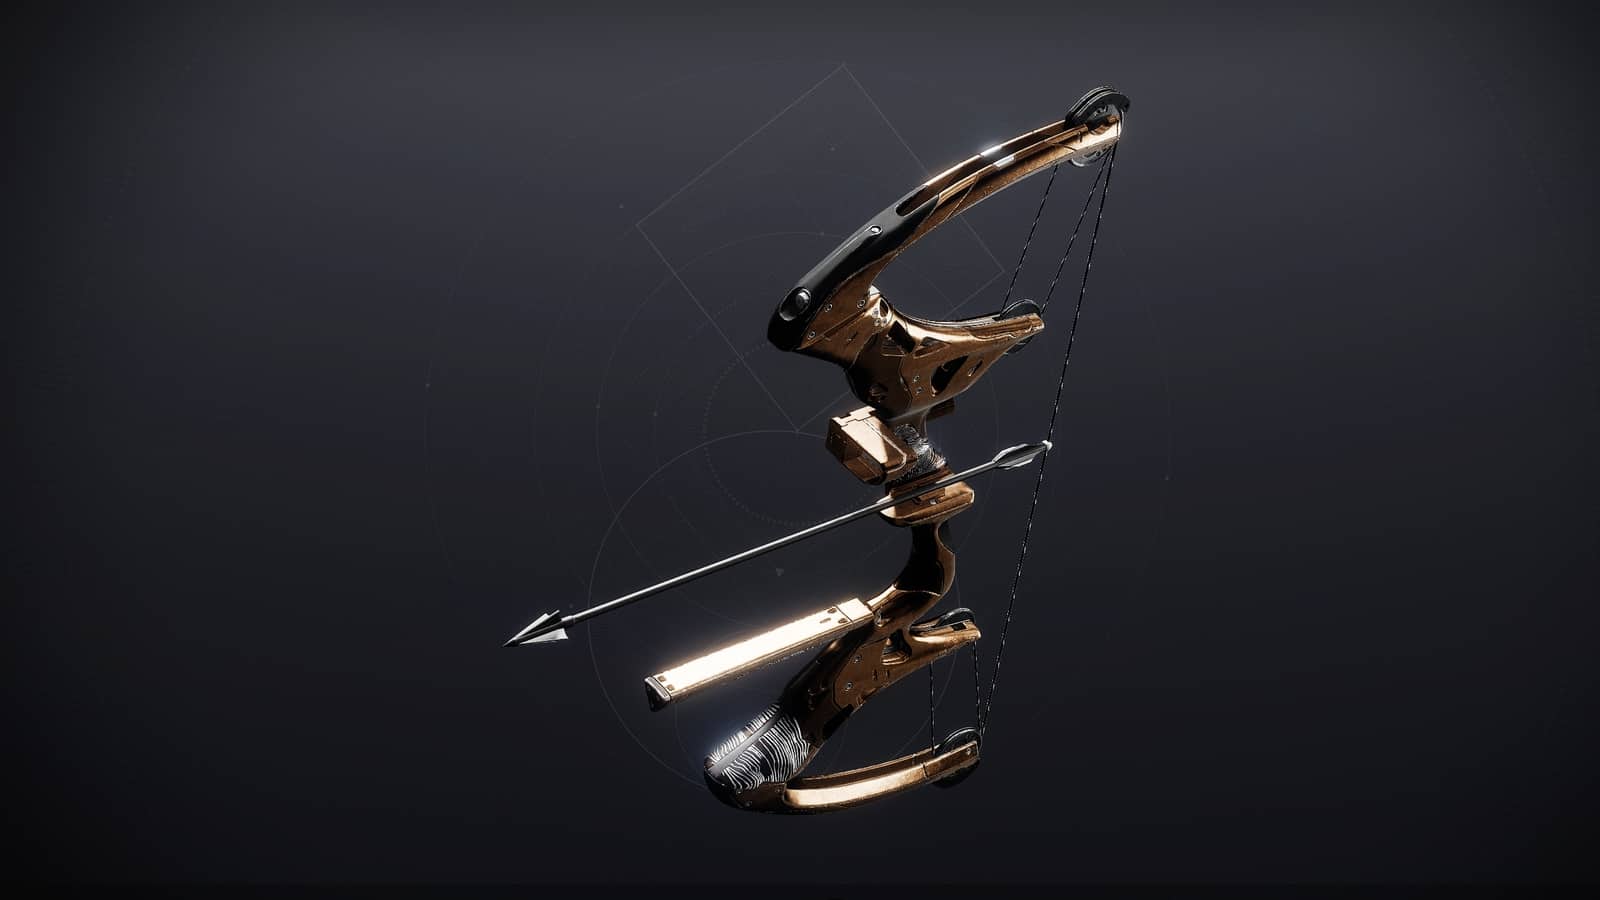 Accrued Redemption Destiny 2 featured bows